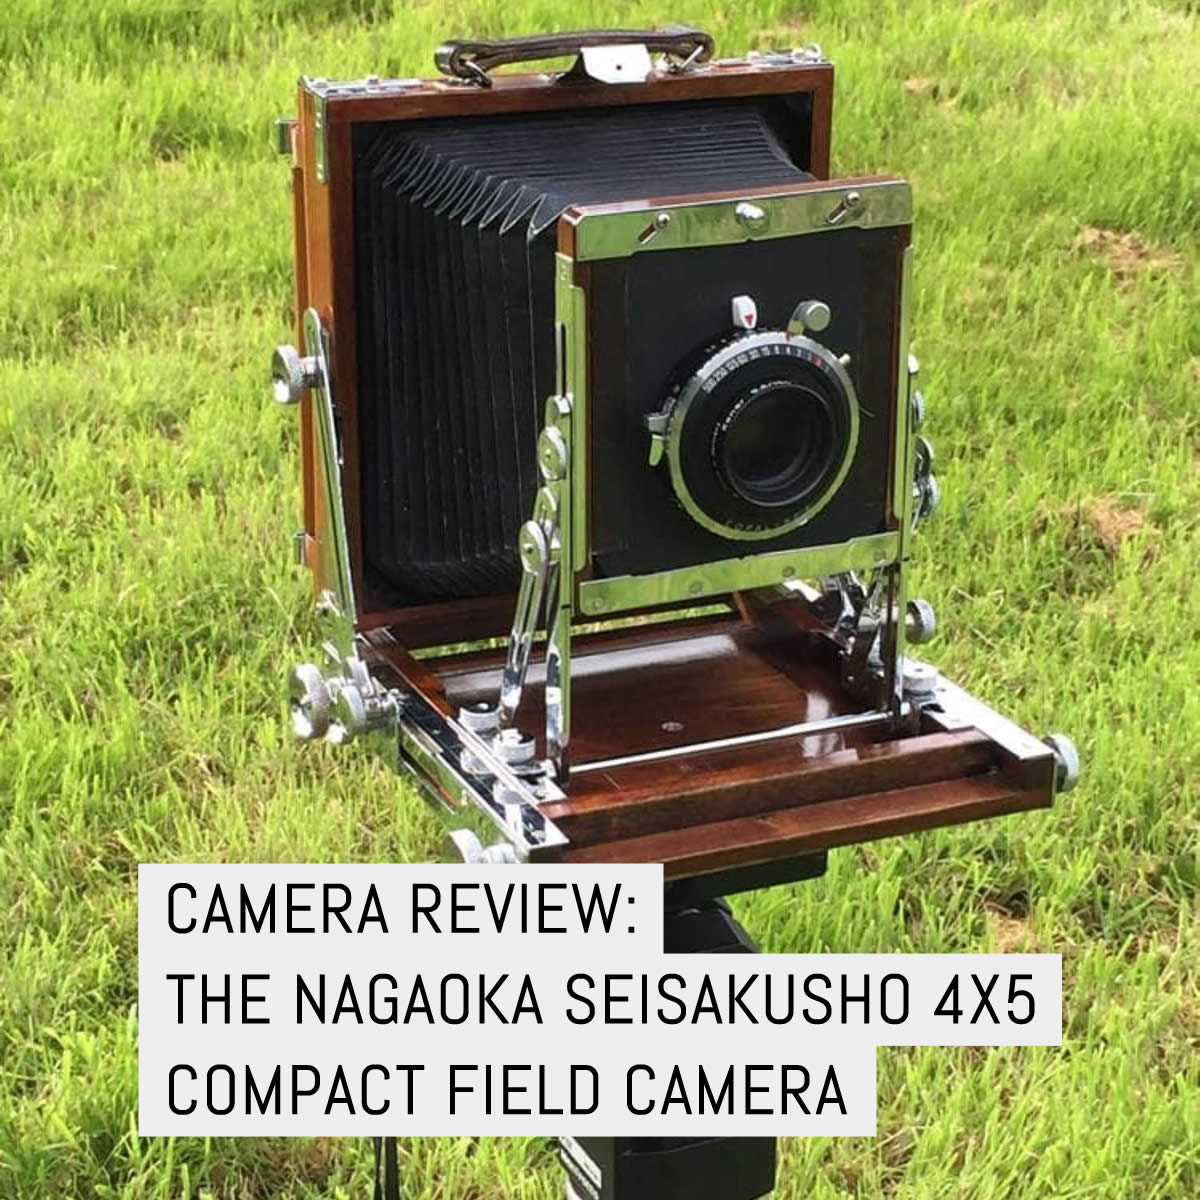 Cover - Camera review - the Nagaoka Seisakusho 4x5 compact field camera